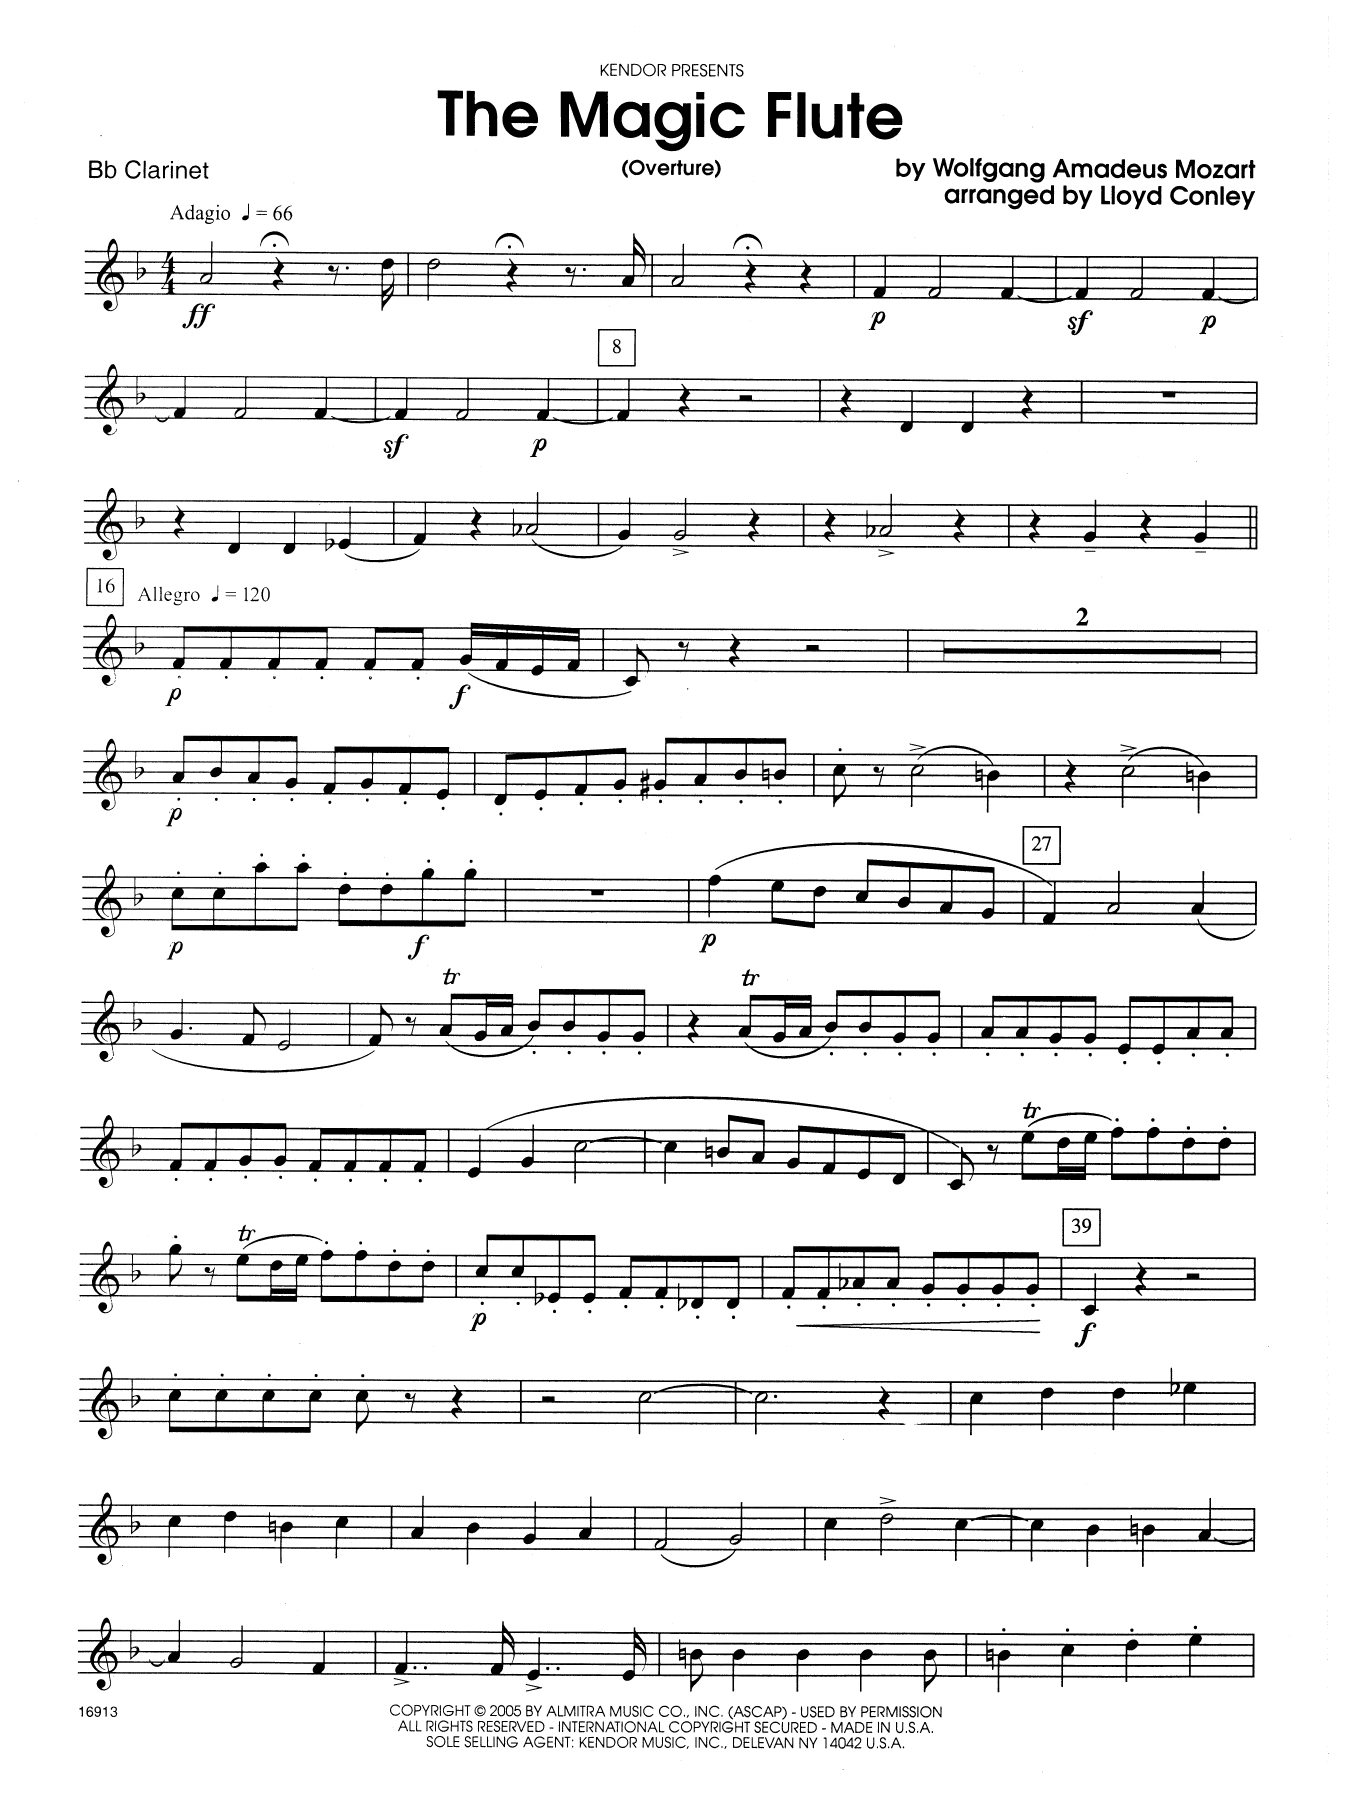 Download Lloyd Conley The Magic Flute (Overture) - Bb Clarine Sheet Music